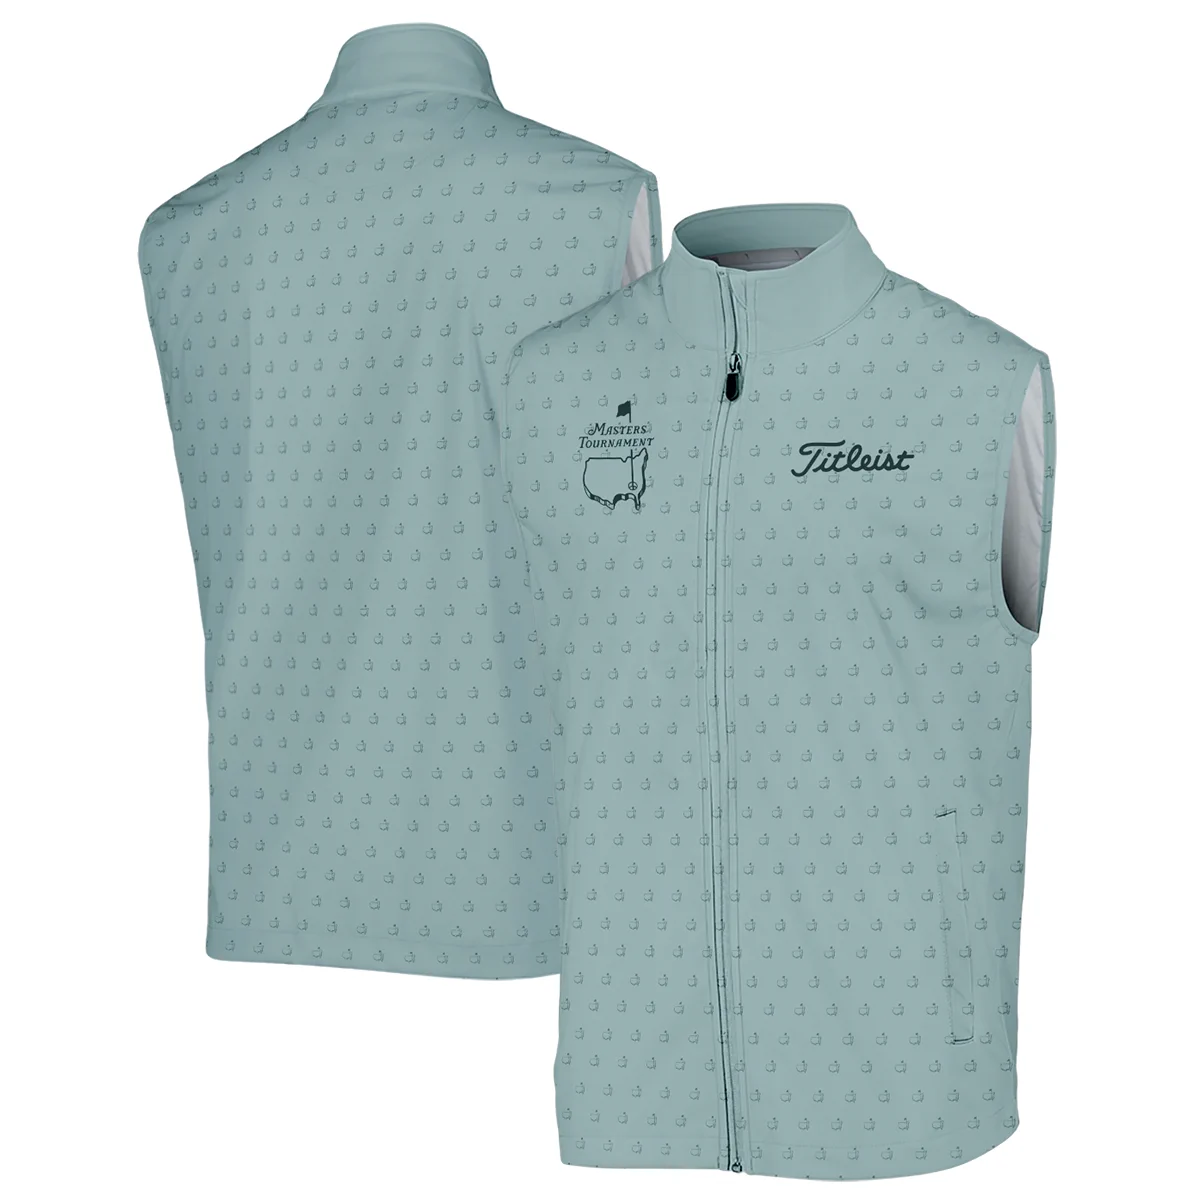 Golf Pattern Masters Tournament Titleist Sleeveless Jacket Cyan Pattern All Over Print Sleeveless Jacket